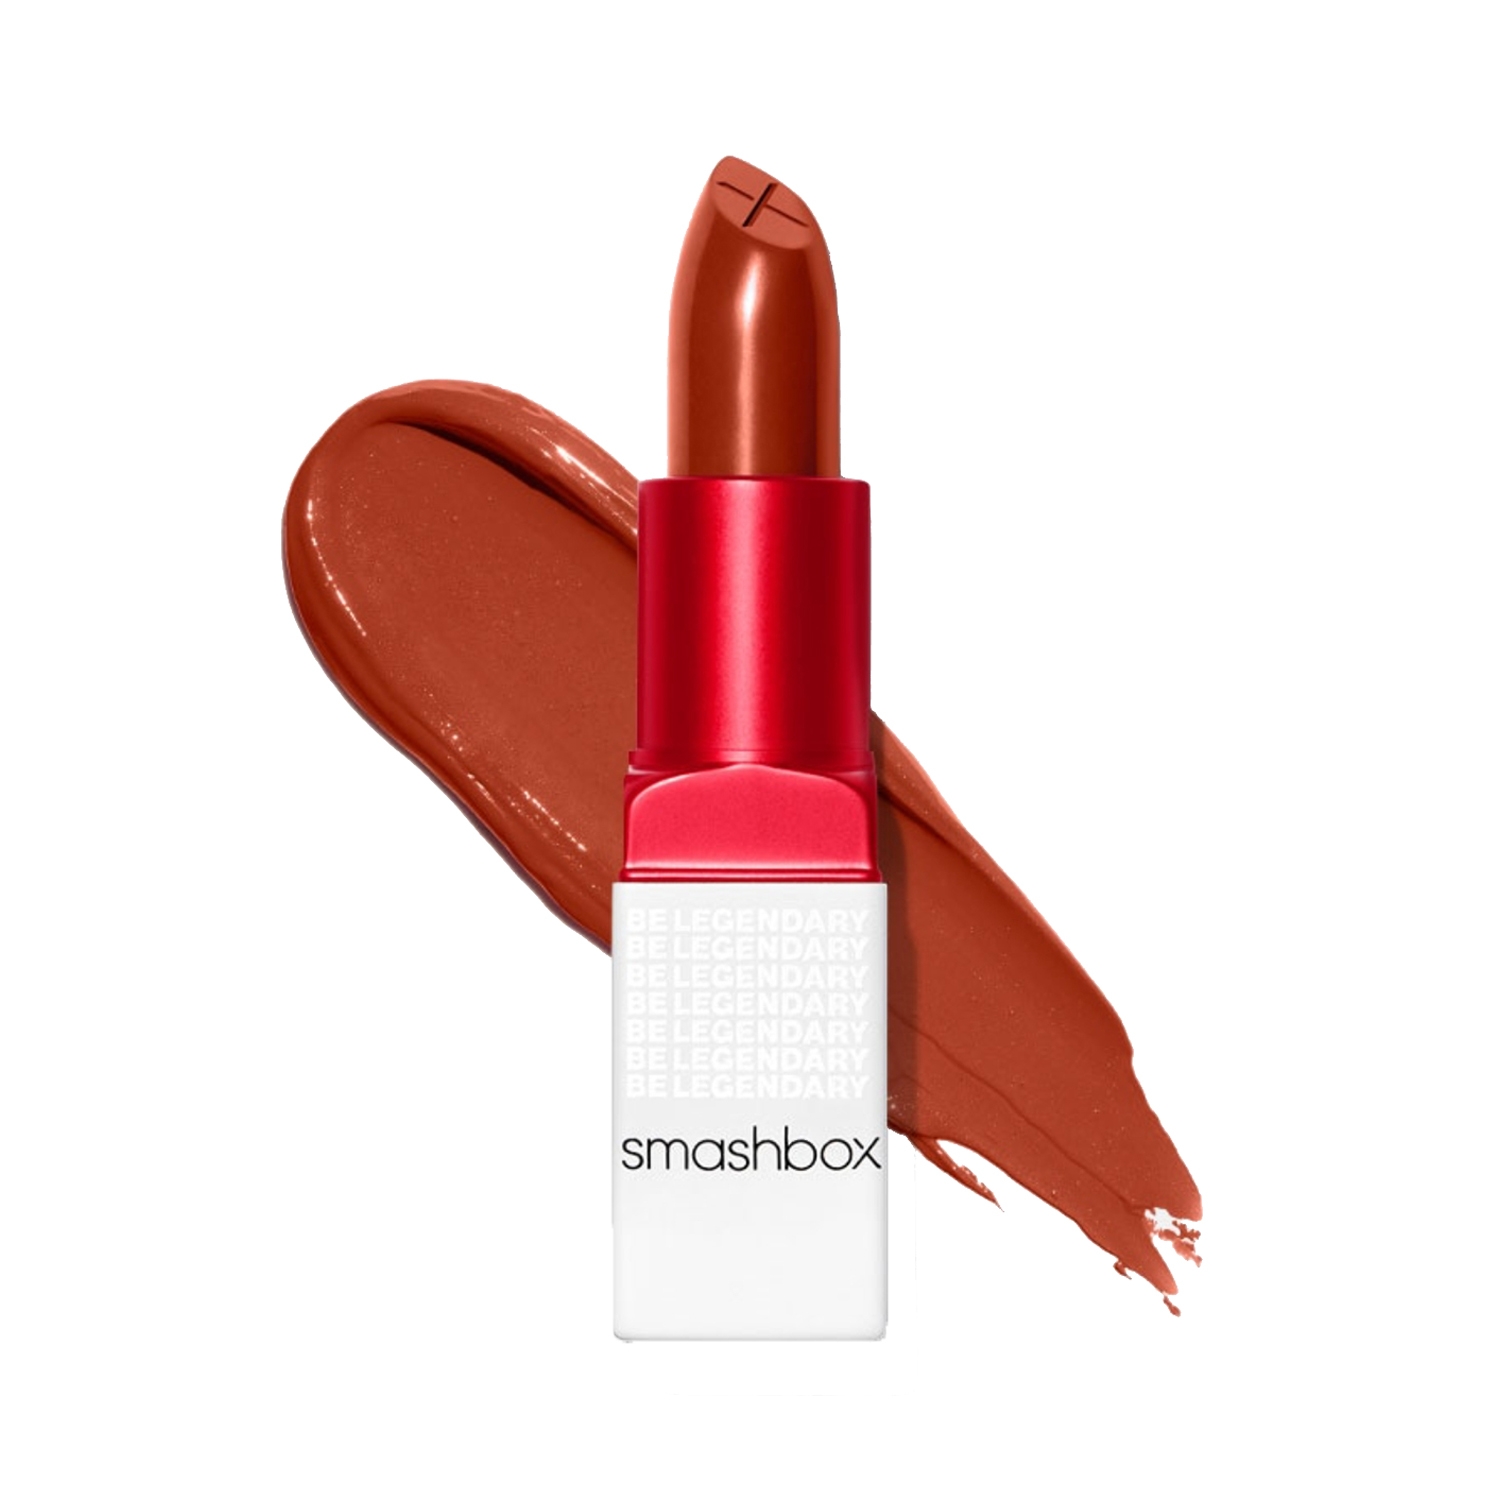 Smashbox | Smashbox Be Legendary Prime & Plush Lipstick - Burnt Orange (3.4g)